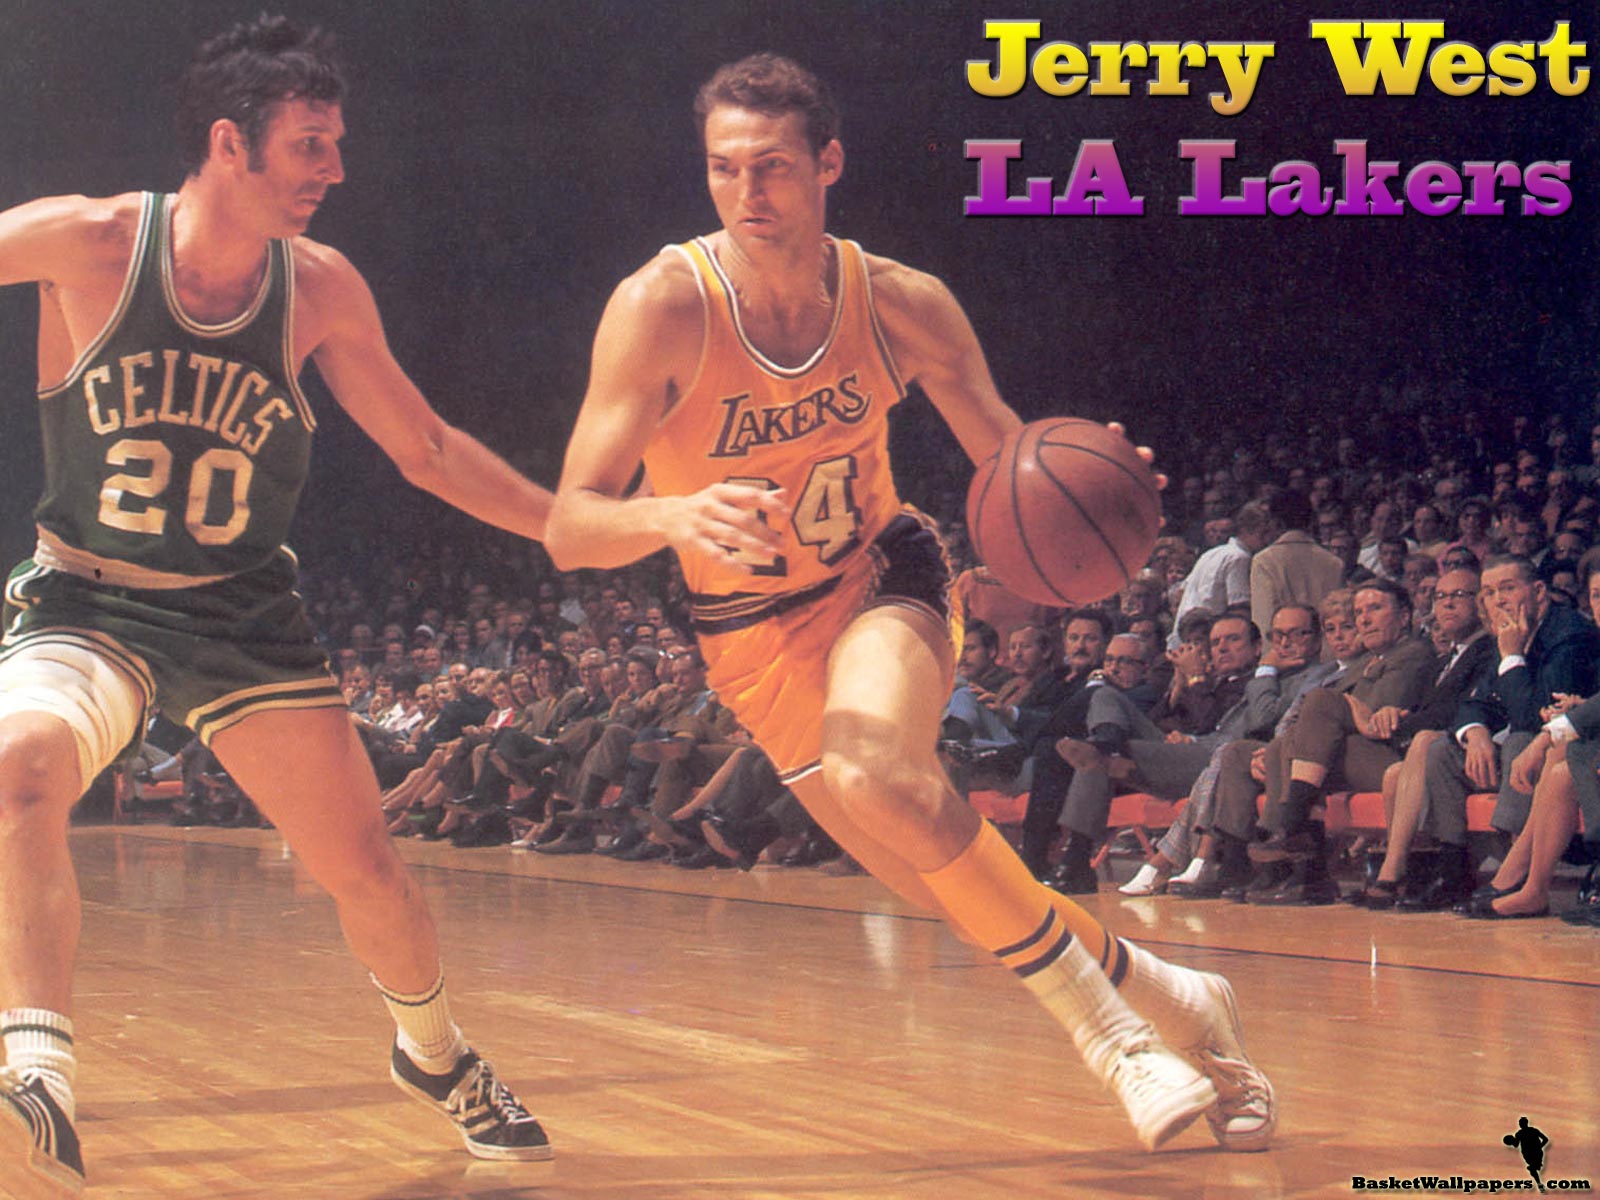 https://blogger.googleusercontent.com/img/b/R29vZ2xl/AVvXsEgZf1577lzWmJgn1HcWui6R0gRJbgLTAwCfD61ETopy2aW9MD9yy73vlhcwth2EiVjmjB1dkQH0LMriKjTxoA0g04XhfuOwCx5L7KlVGldJlX52RCfW0t8SMcgquYL9VfHf4FHe3vYW-RKA/s1600/Jerry-West-LA-Lakers-Wallpaper.jpg